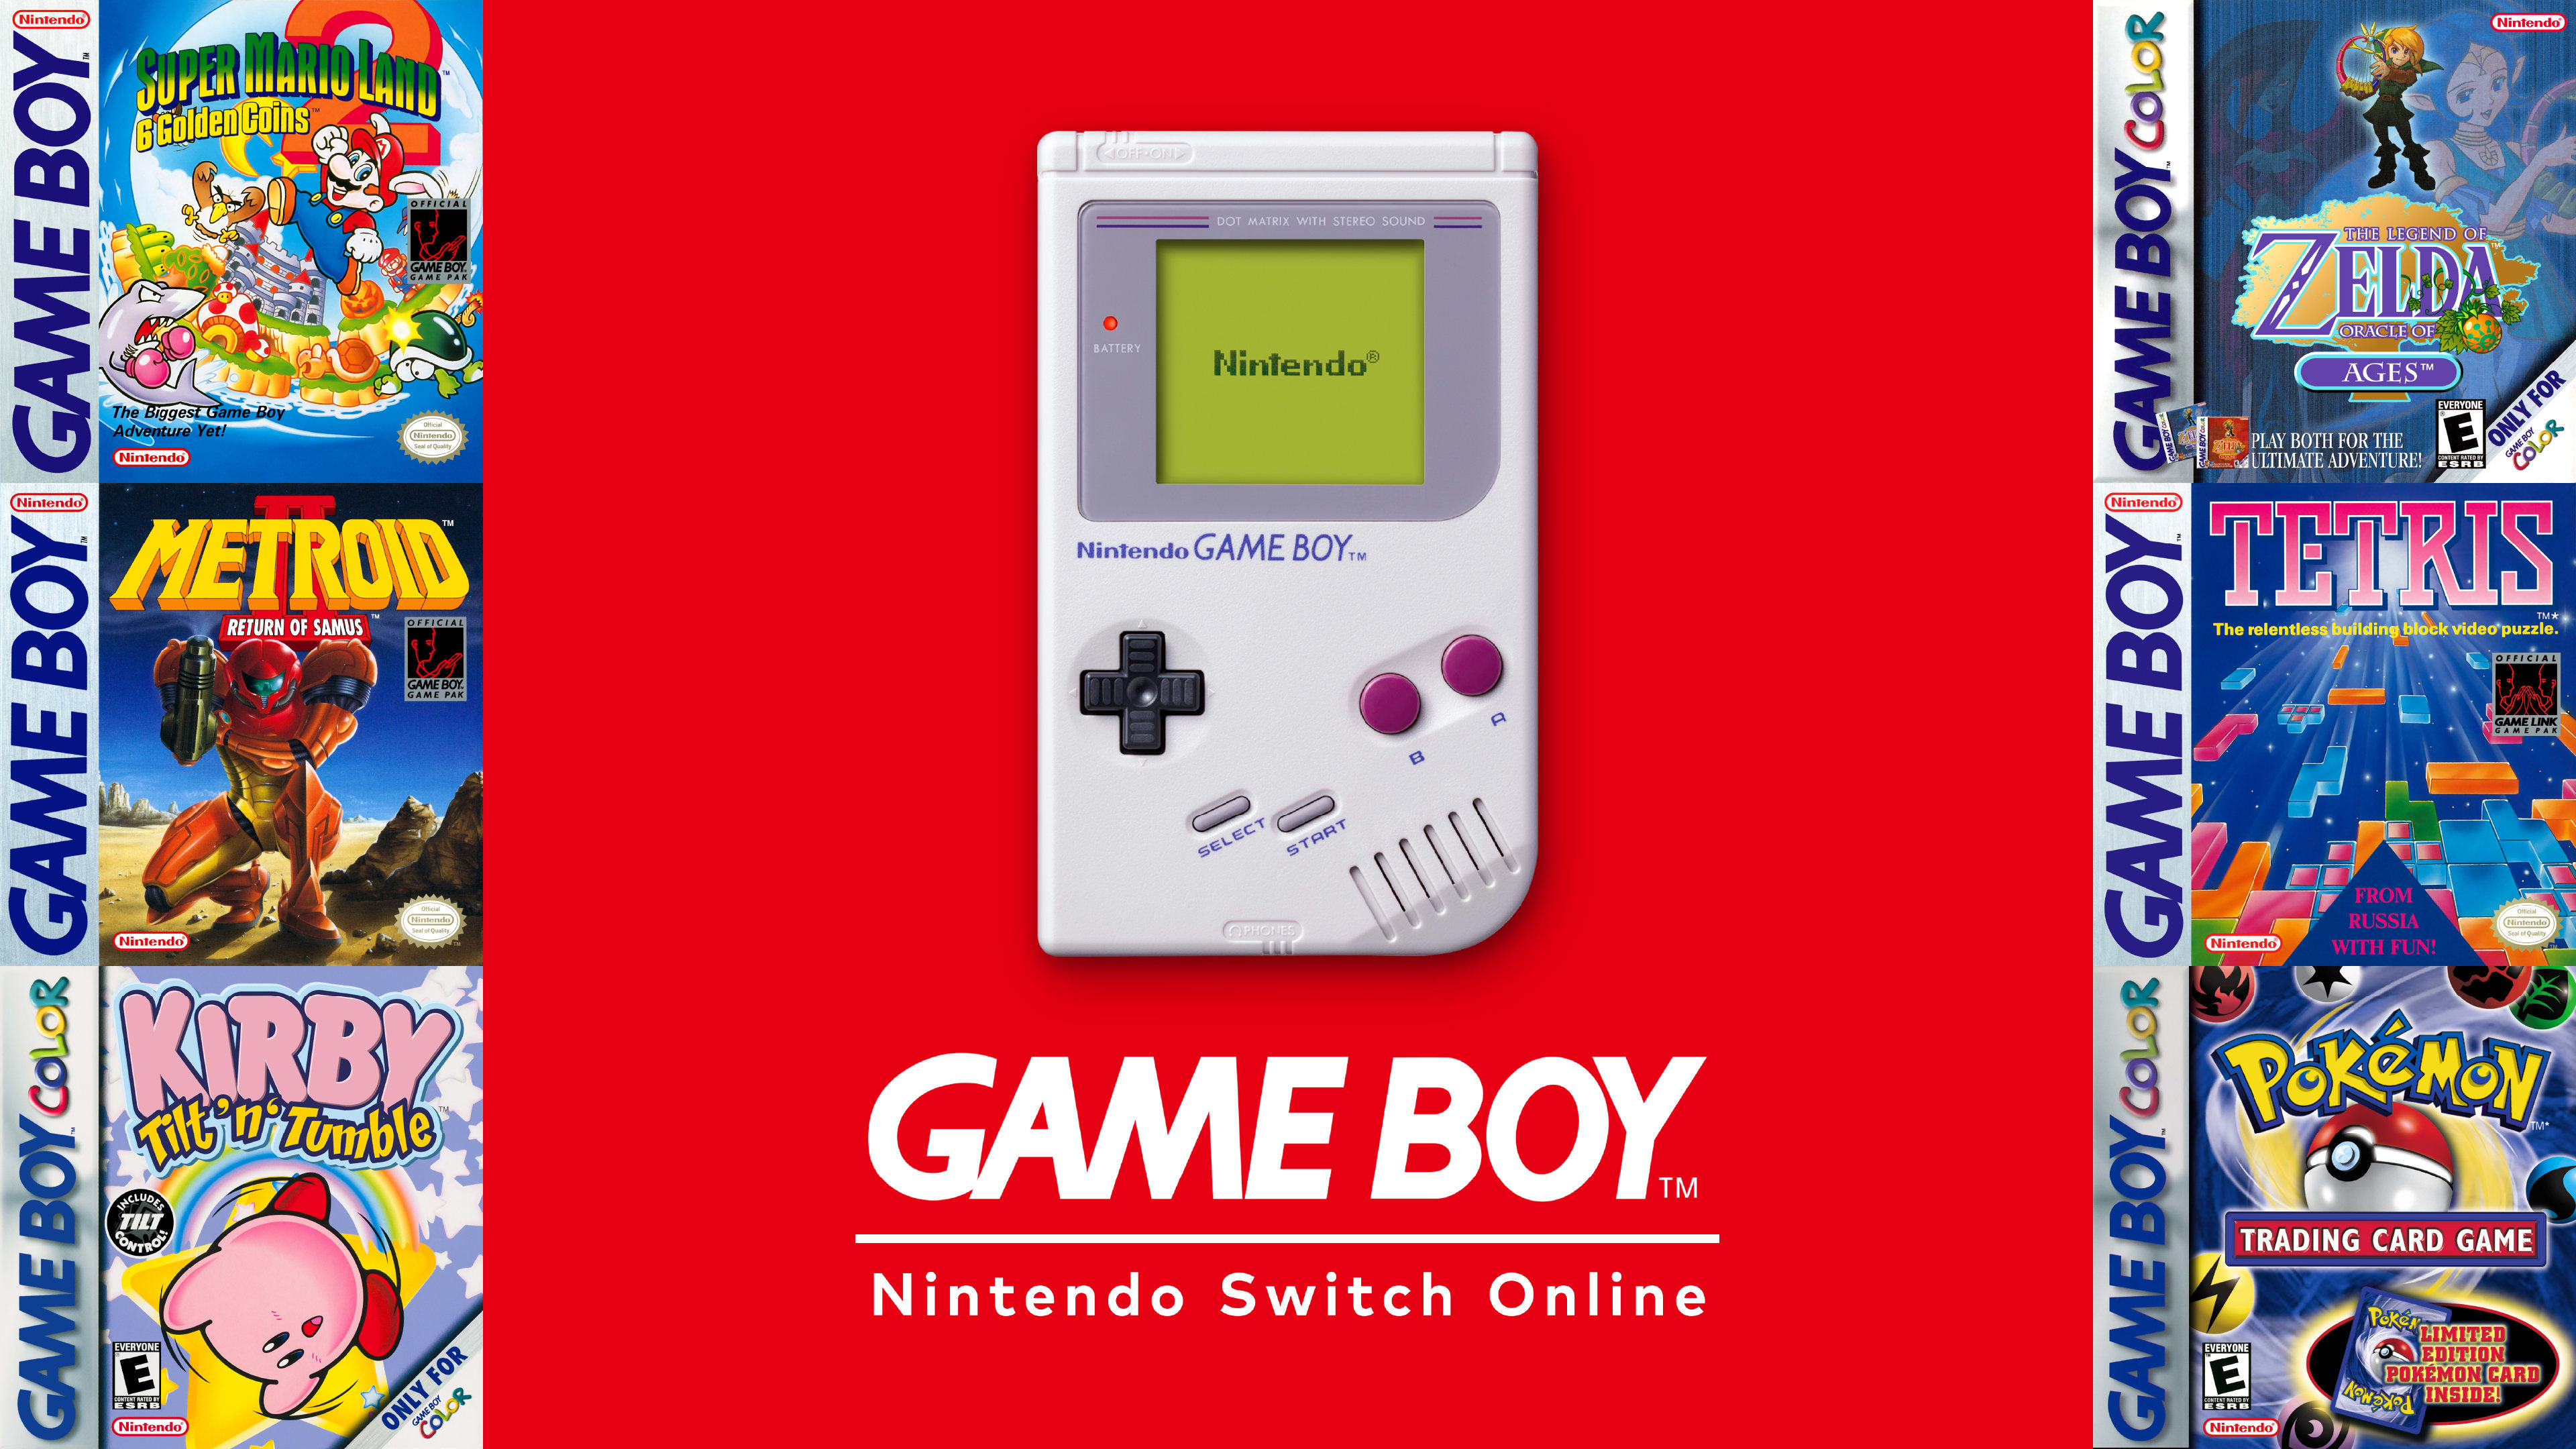 Game Boy image with  Game Boy - Nintendo Switch Online logo